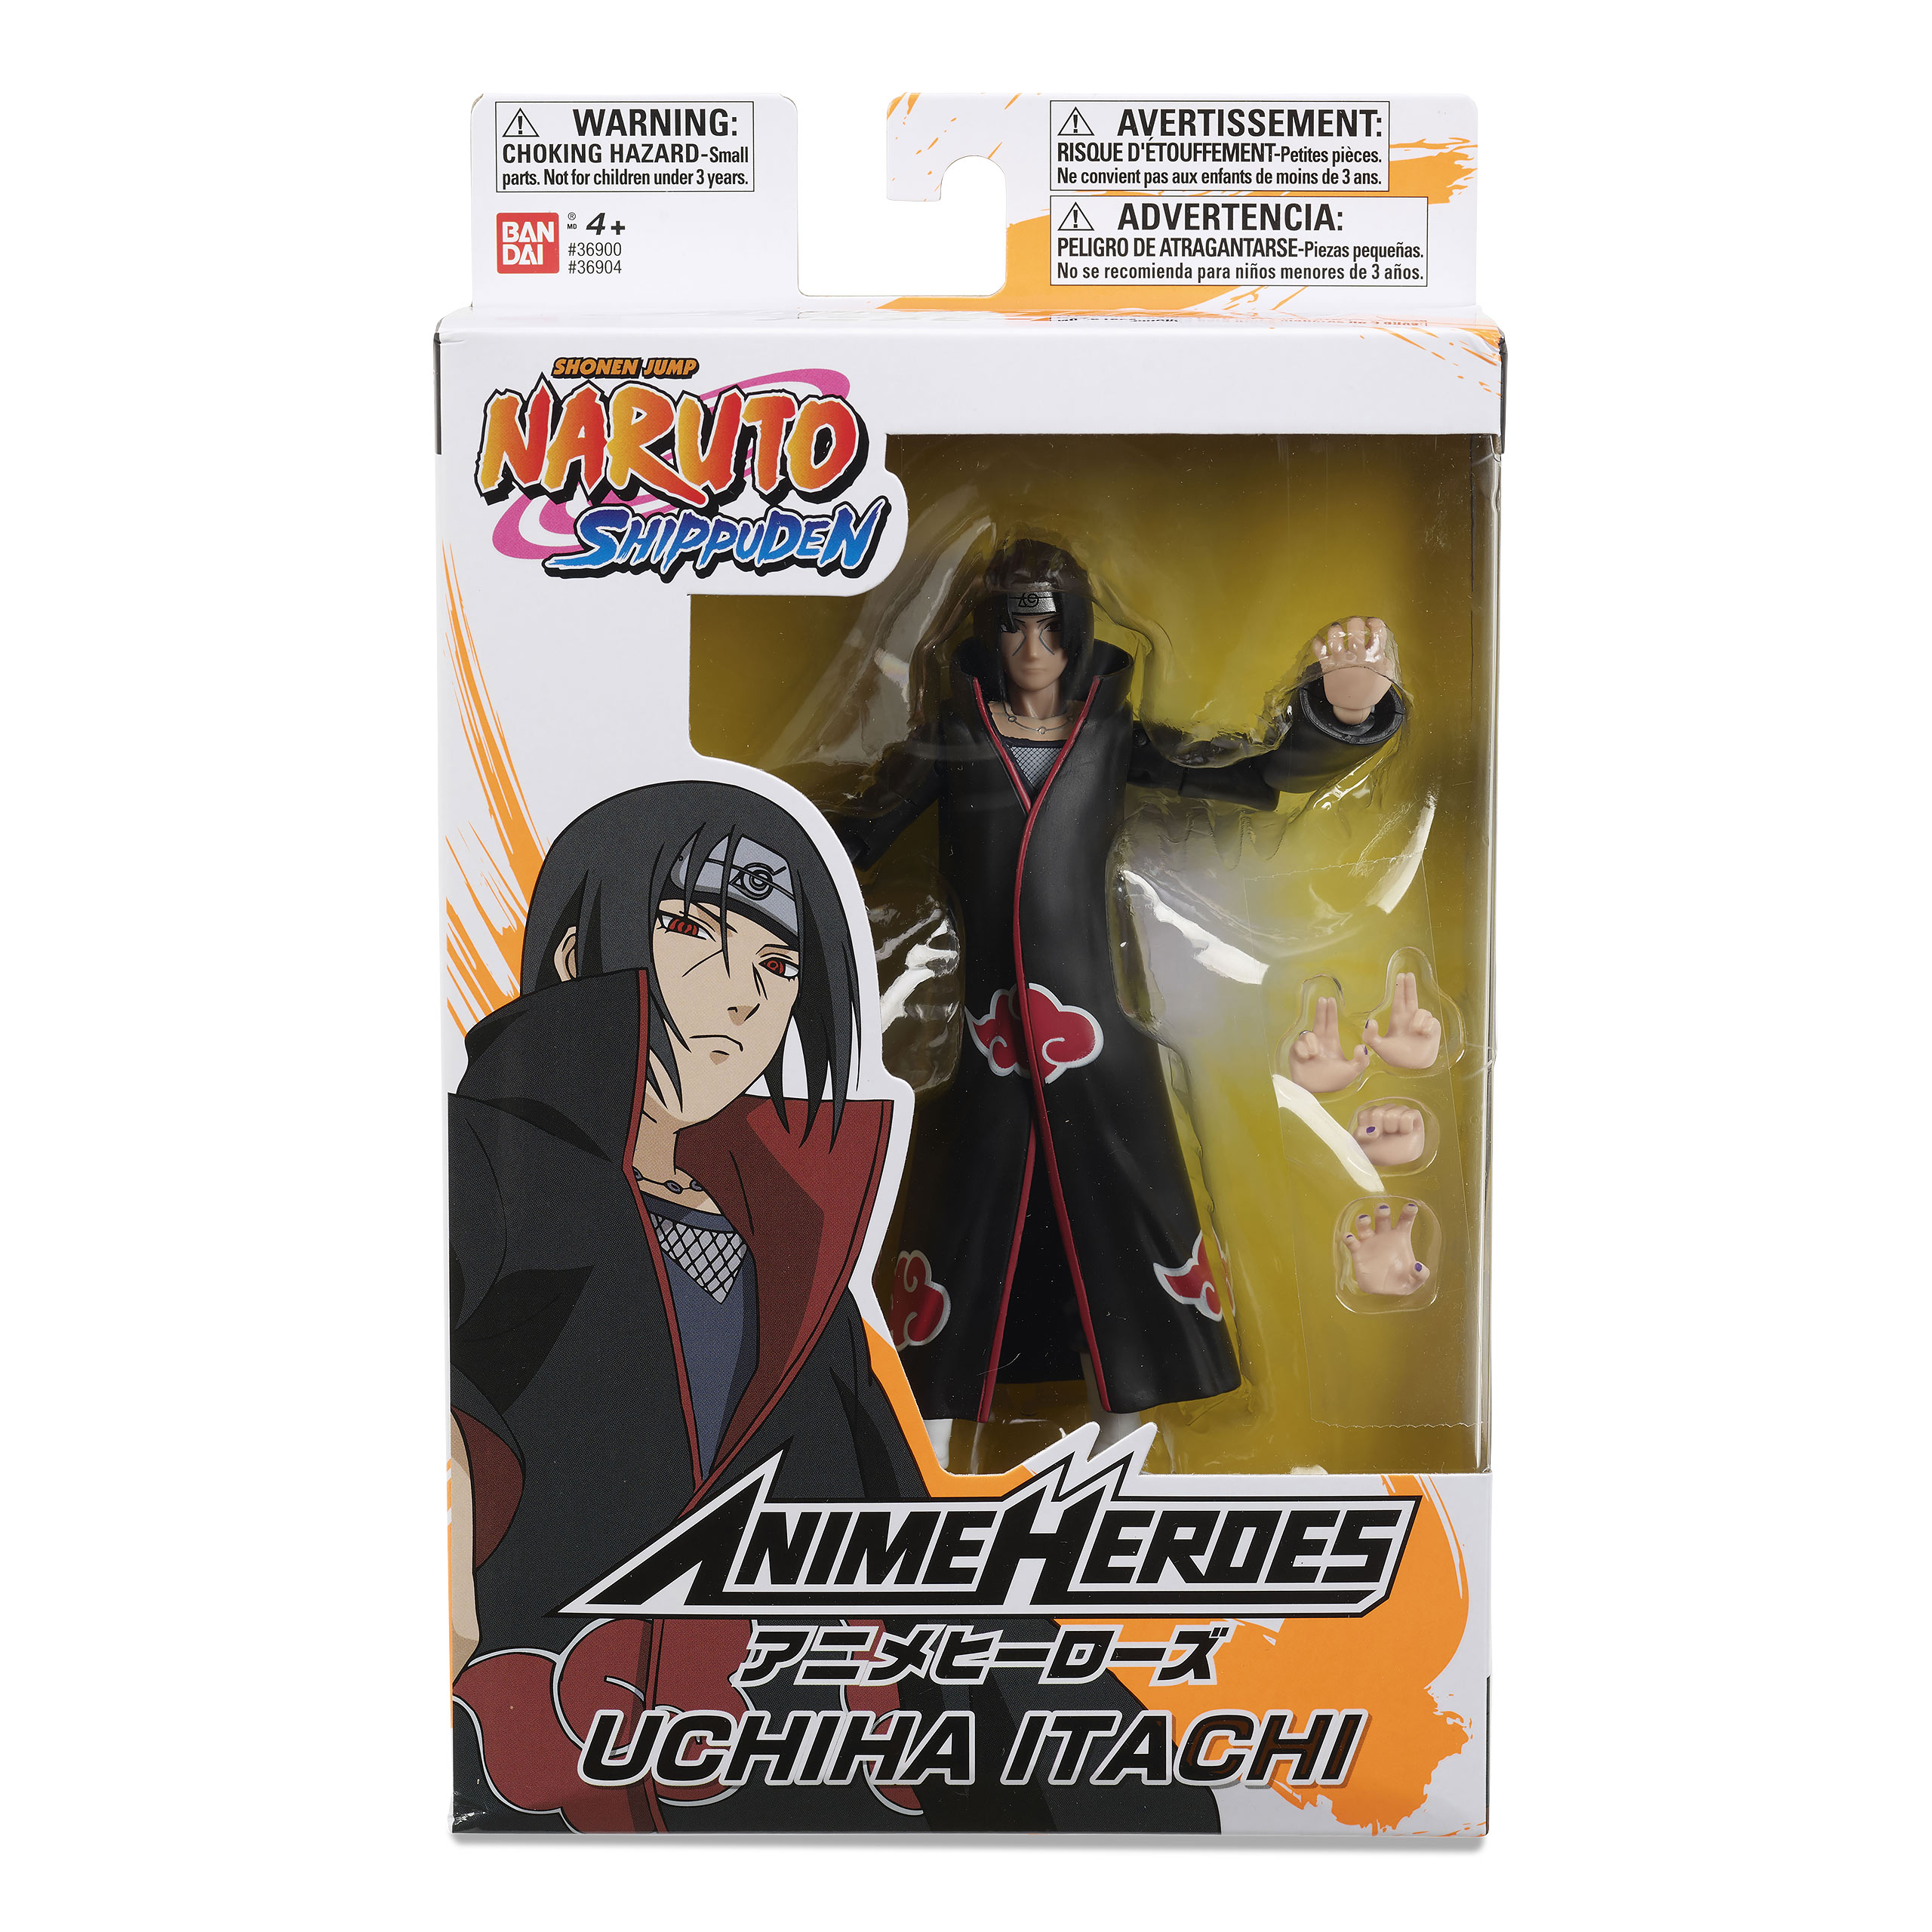 Naruto Shippuden - Uchiha Itachi Anime Heroes Action Figure